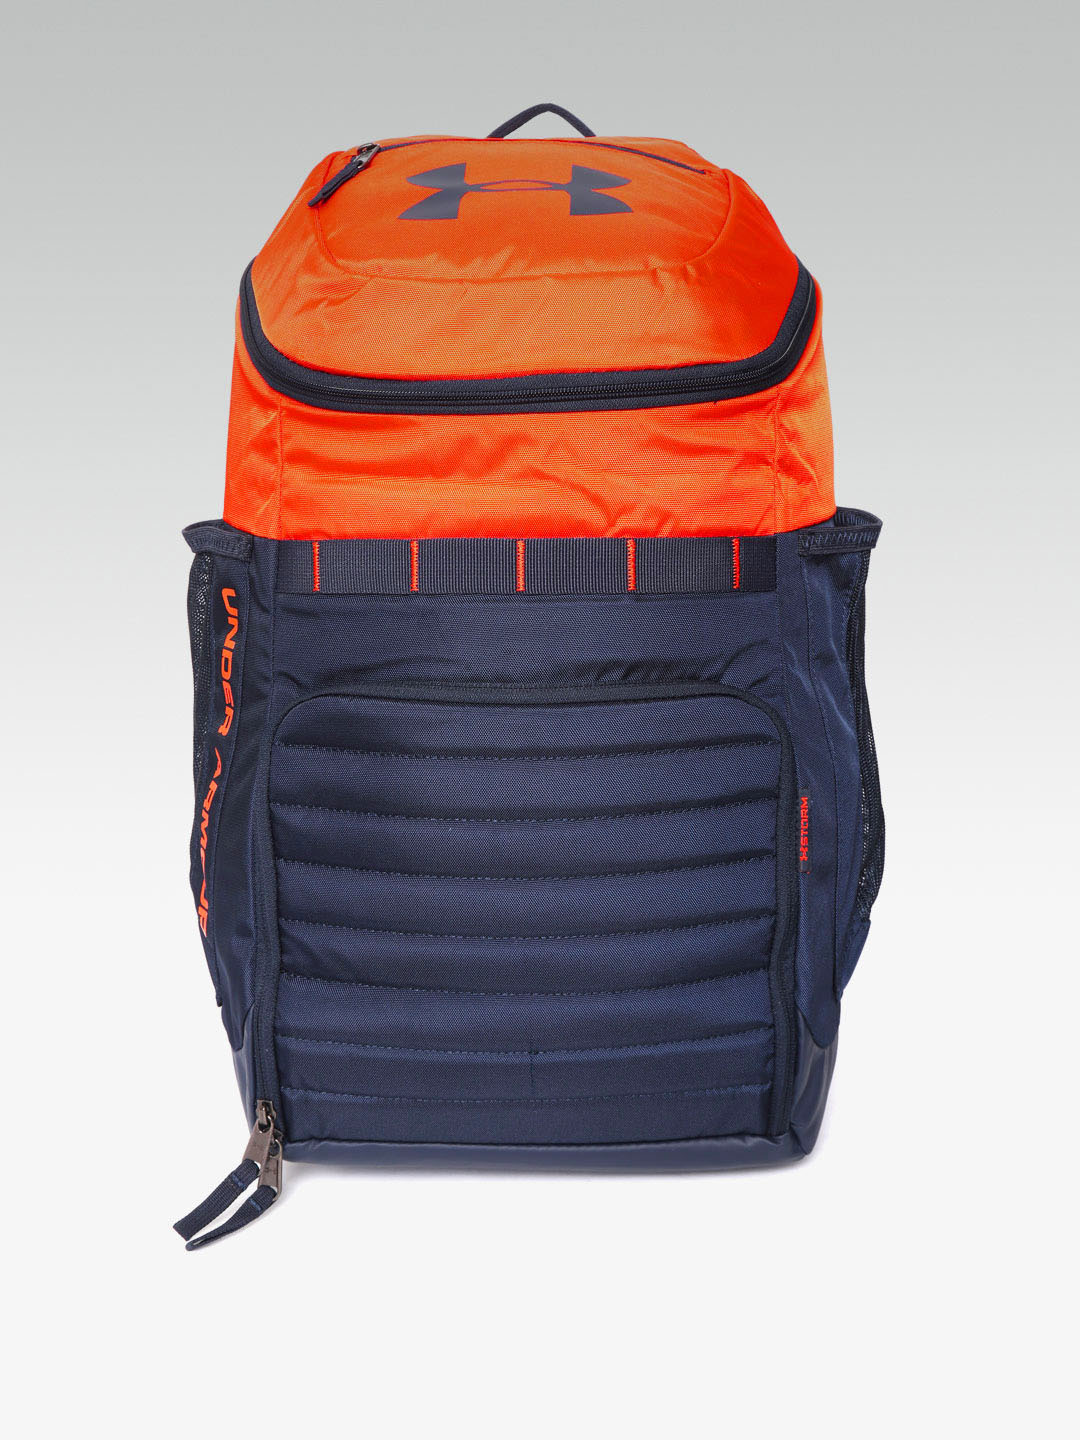 orange and black under armour backpack